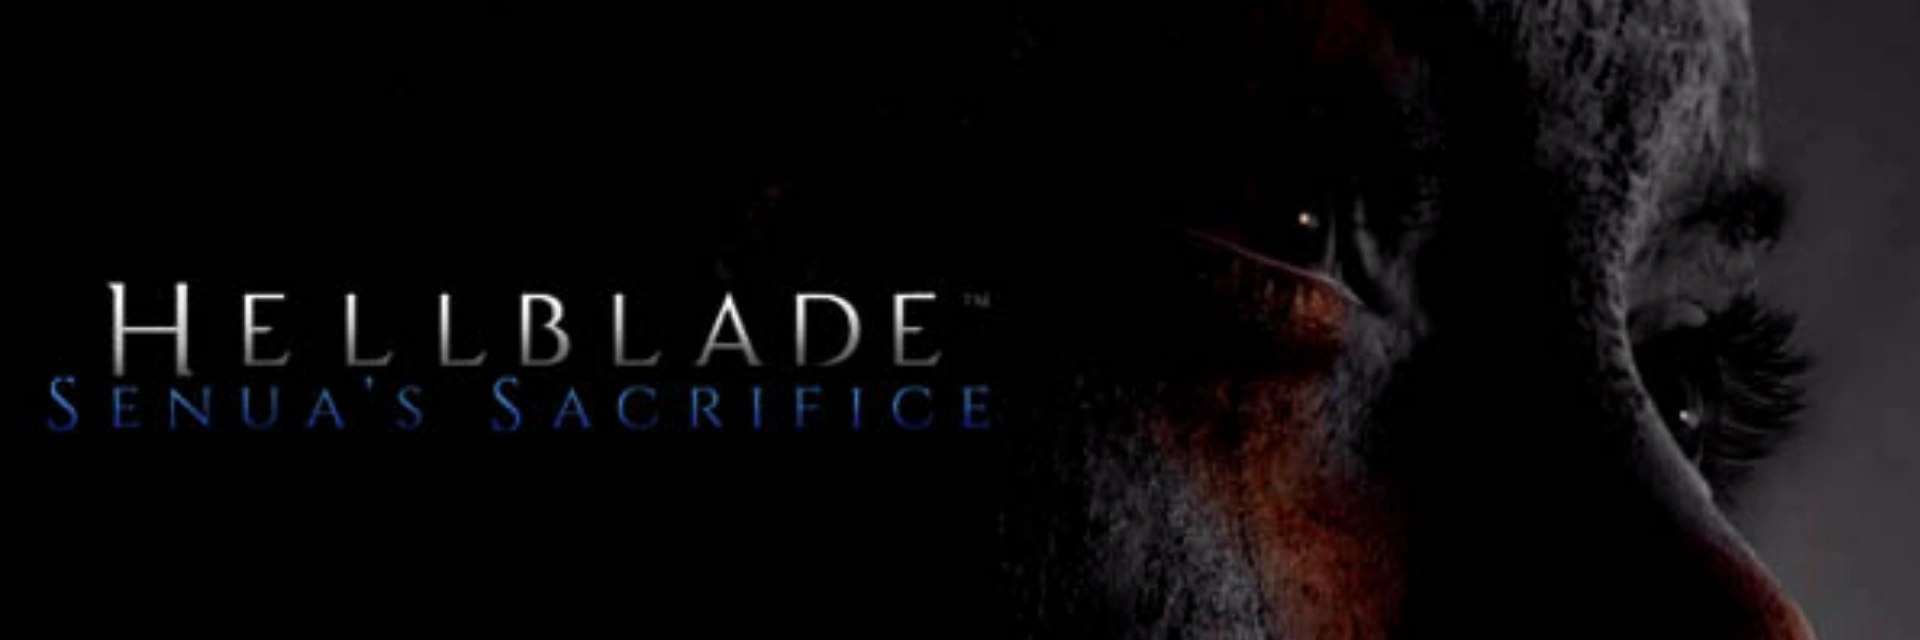 Hellblade.Senuas.Sacrifice.banner2